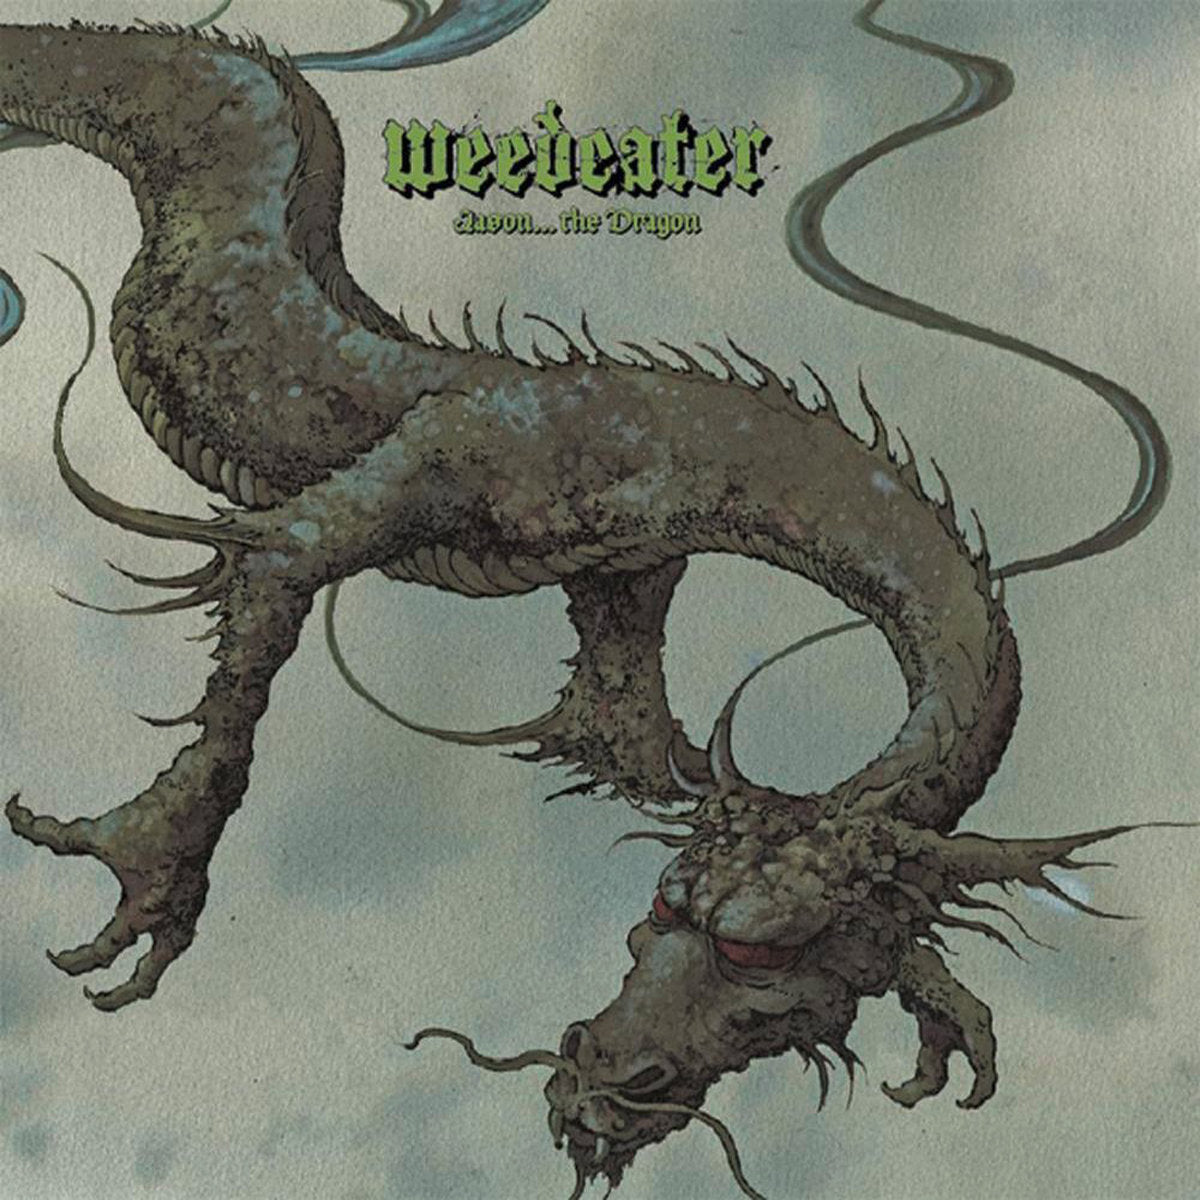 Weedeater, "Jason... The Dragon" (Grey Vinyl)